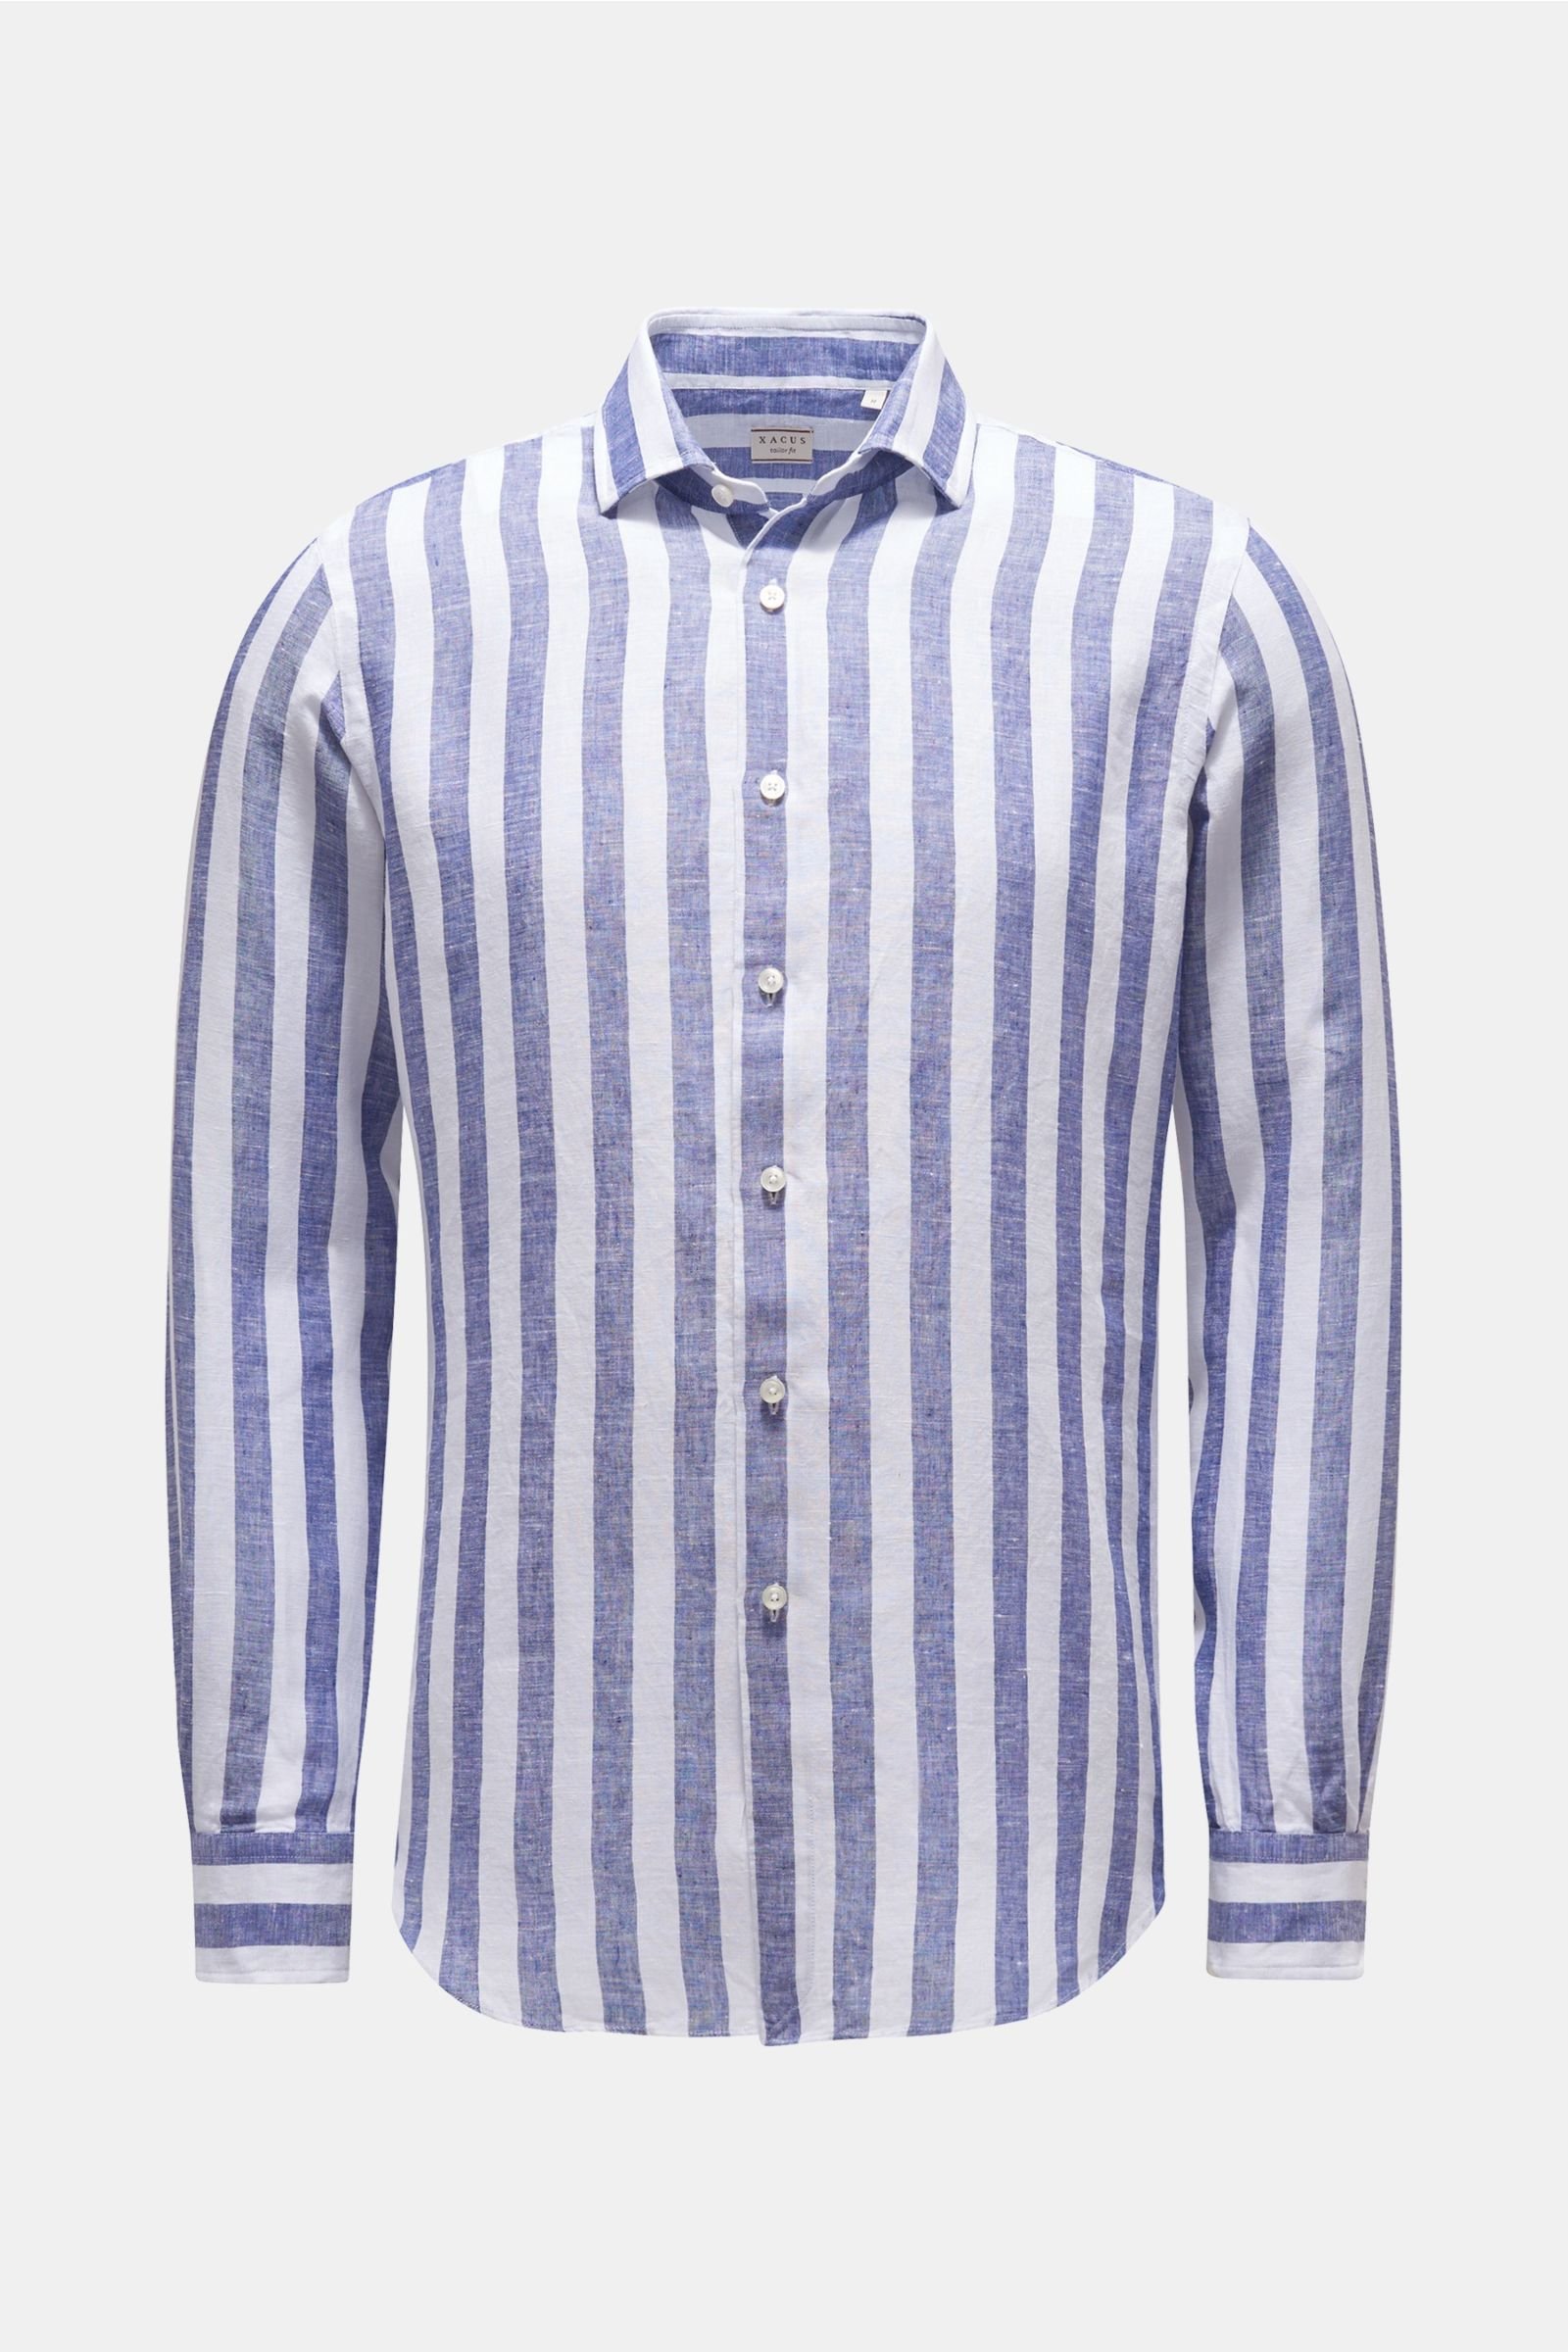 Linen shirt 'Tailor Fit' slim collar navy/white striped